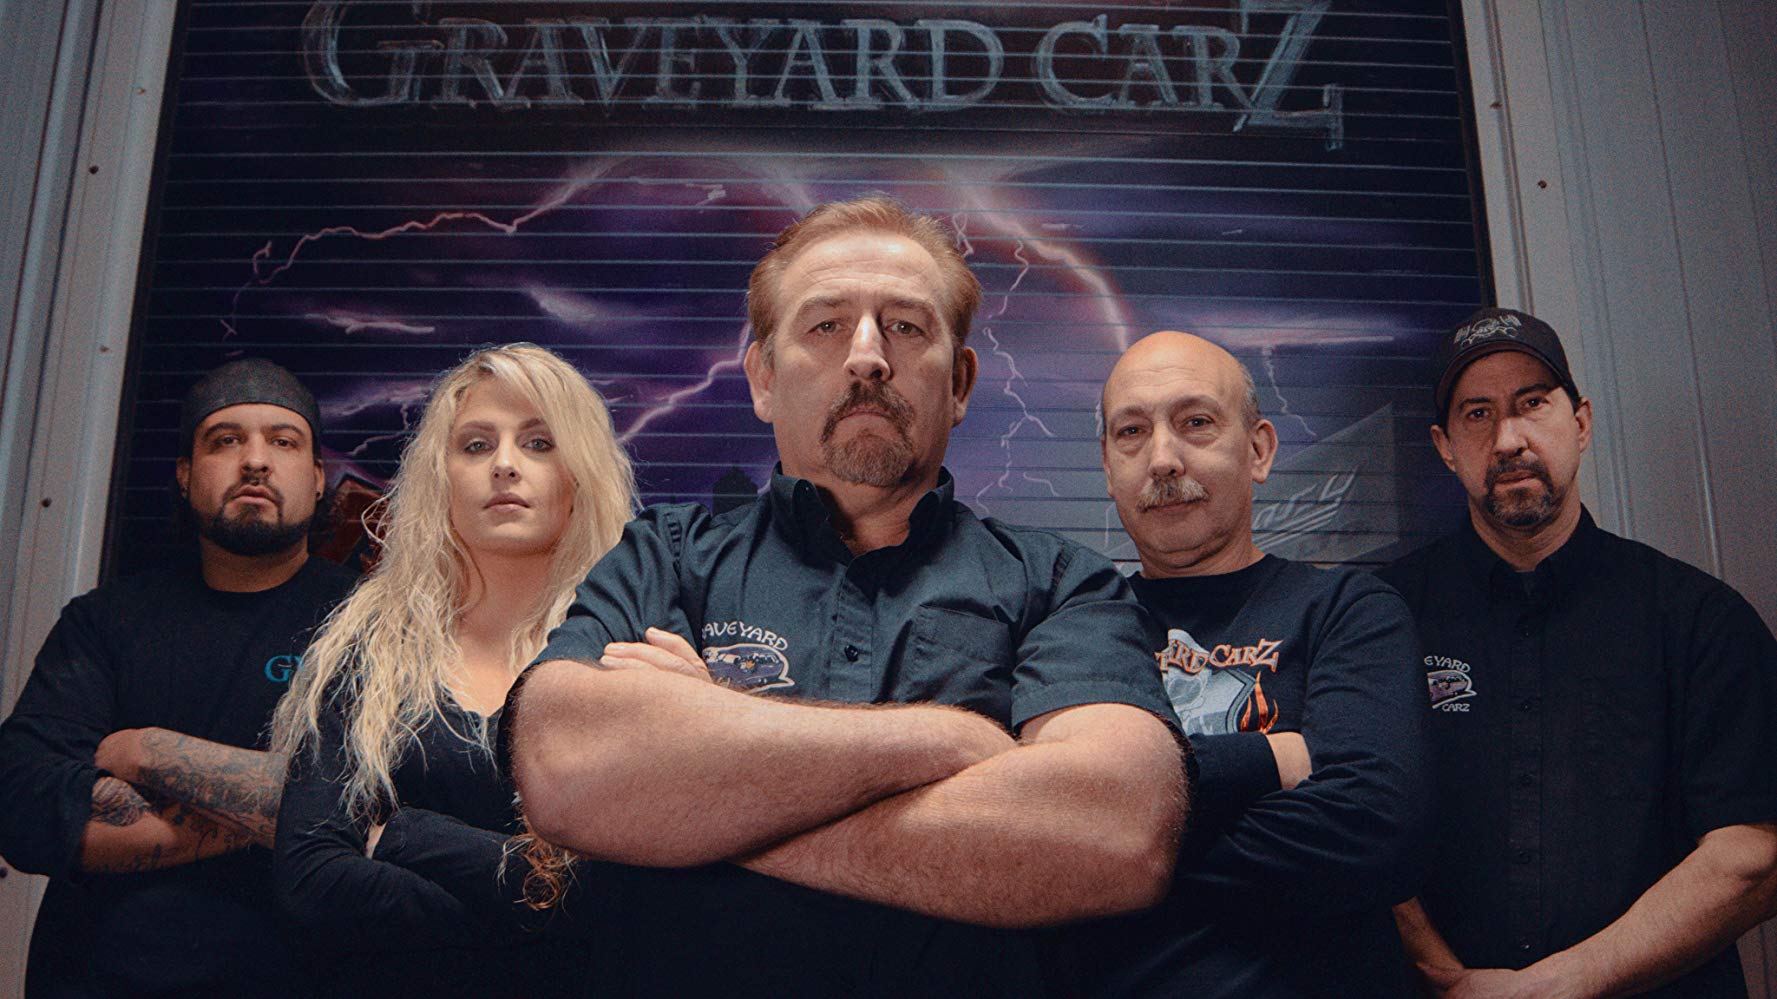 Watch Graveyard Carz - Season 4